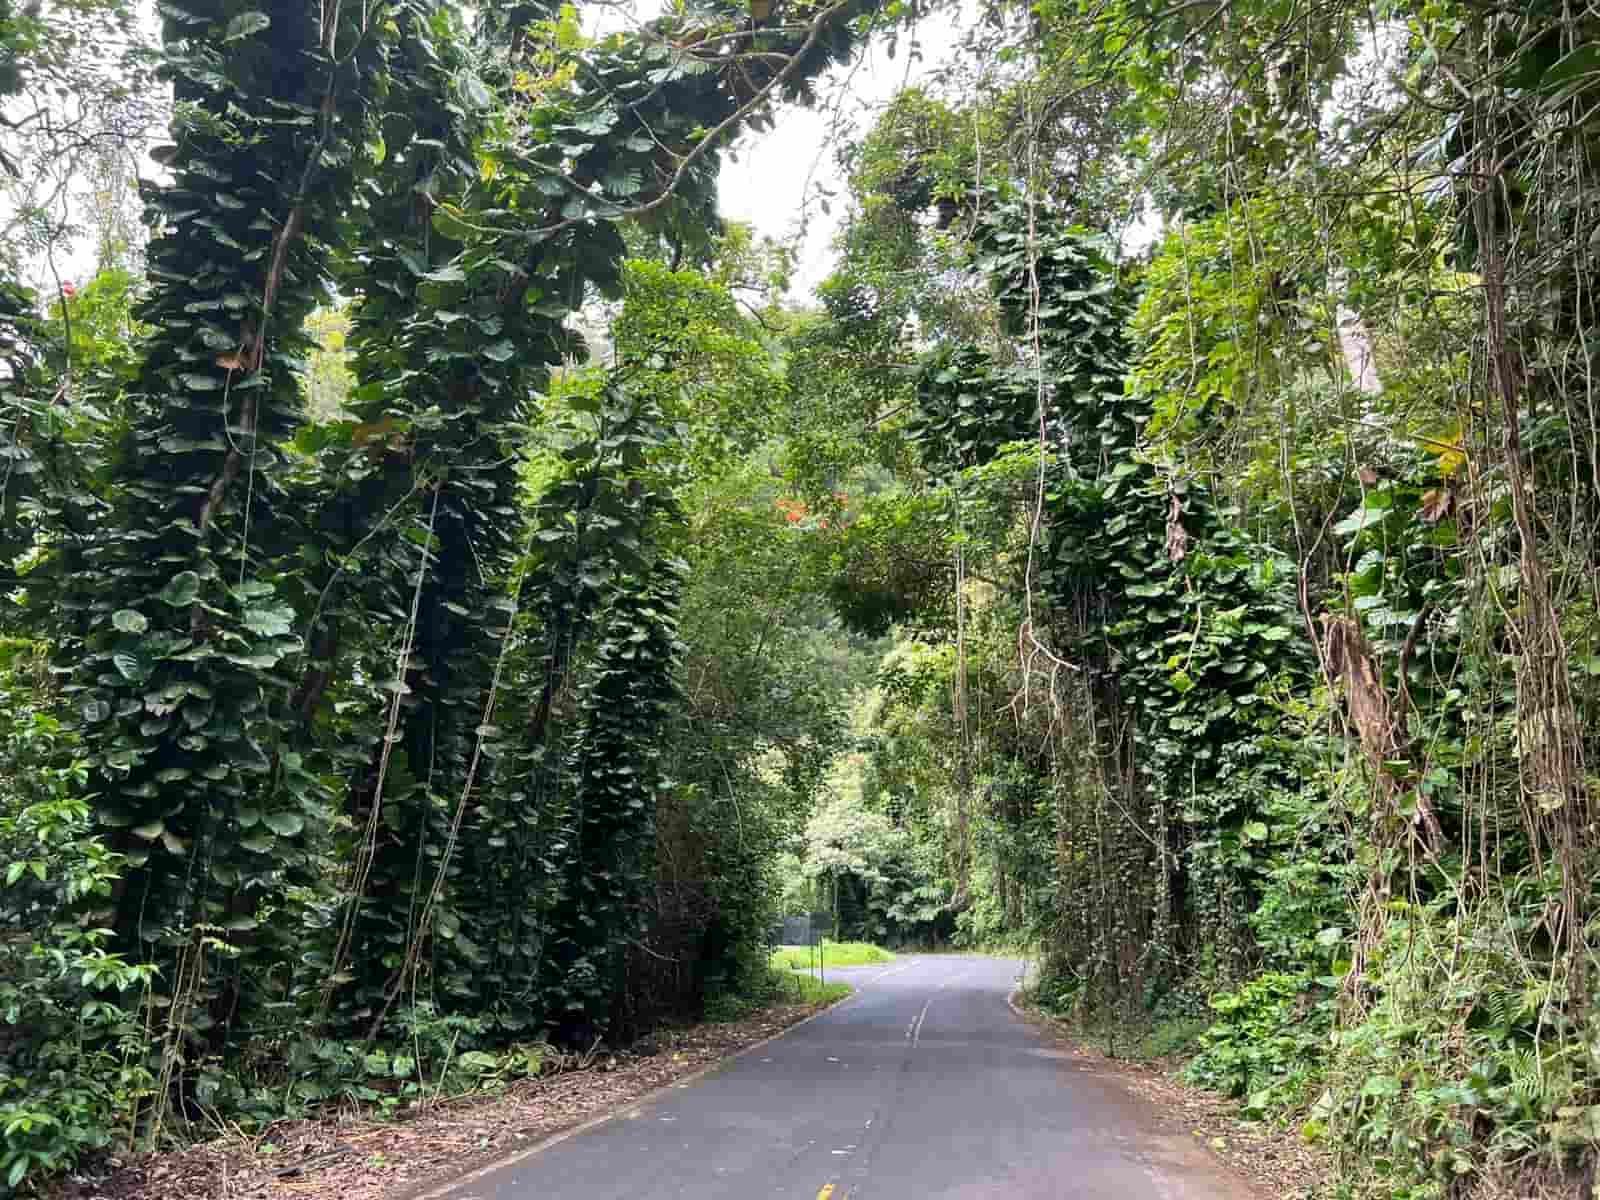 Jalan menuju road to Hana yang cantik dan hijau